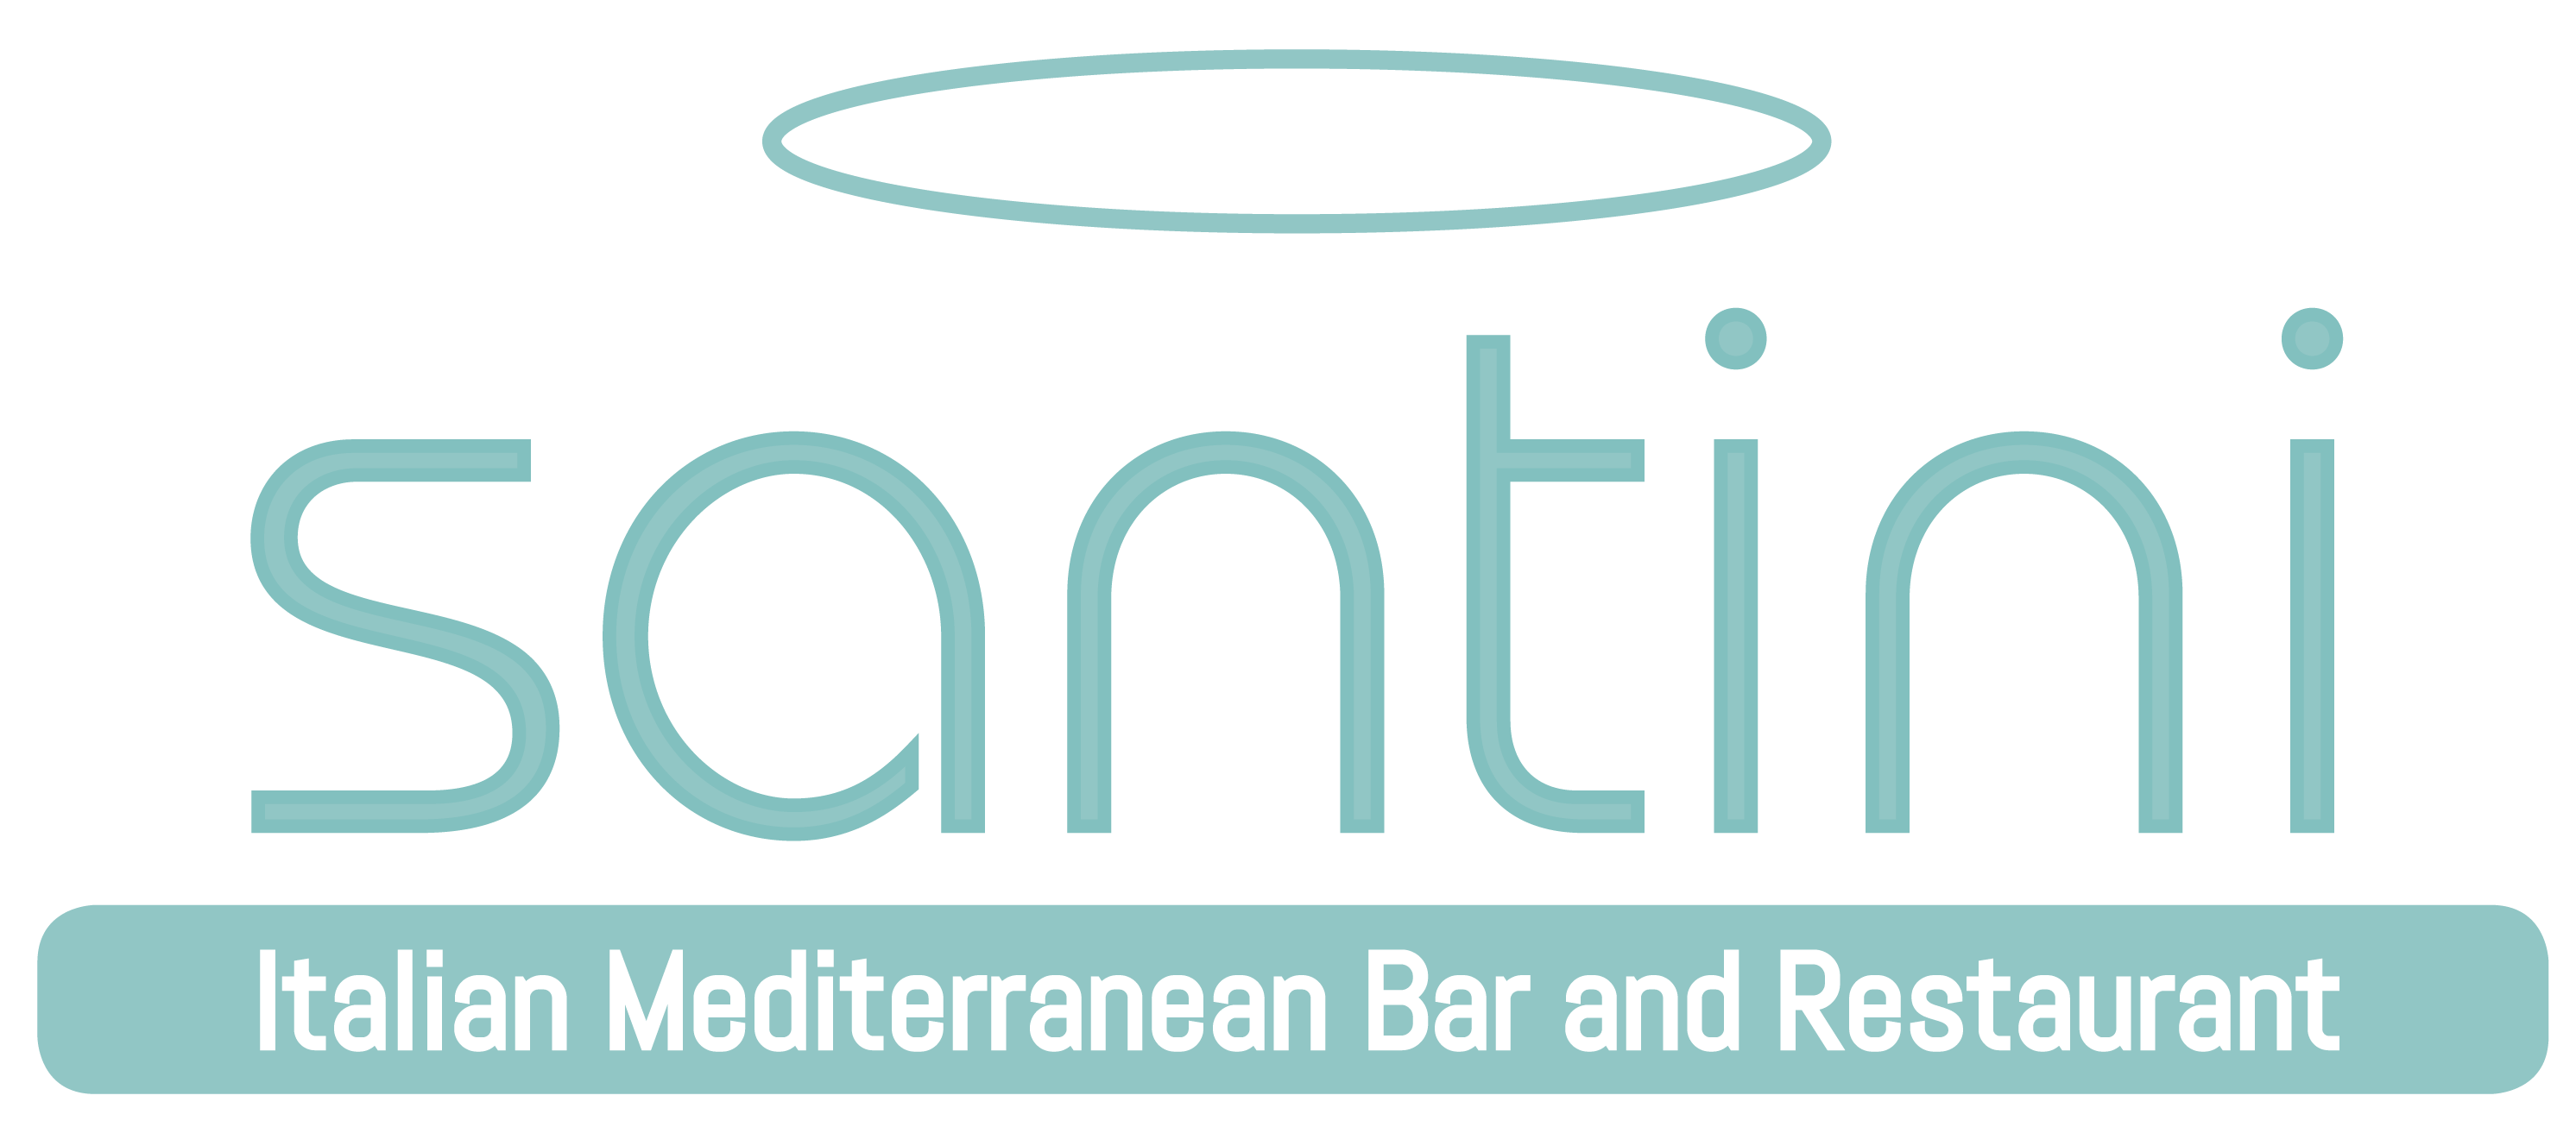 Restaurant Oval Logo - About Santini Italian Restaurant - Mediterranean Dining at its best!